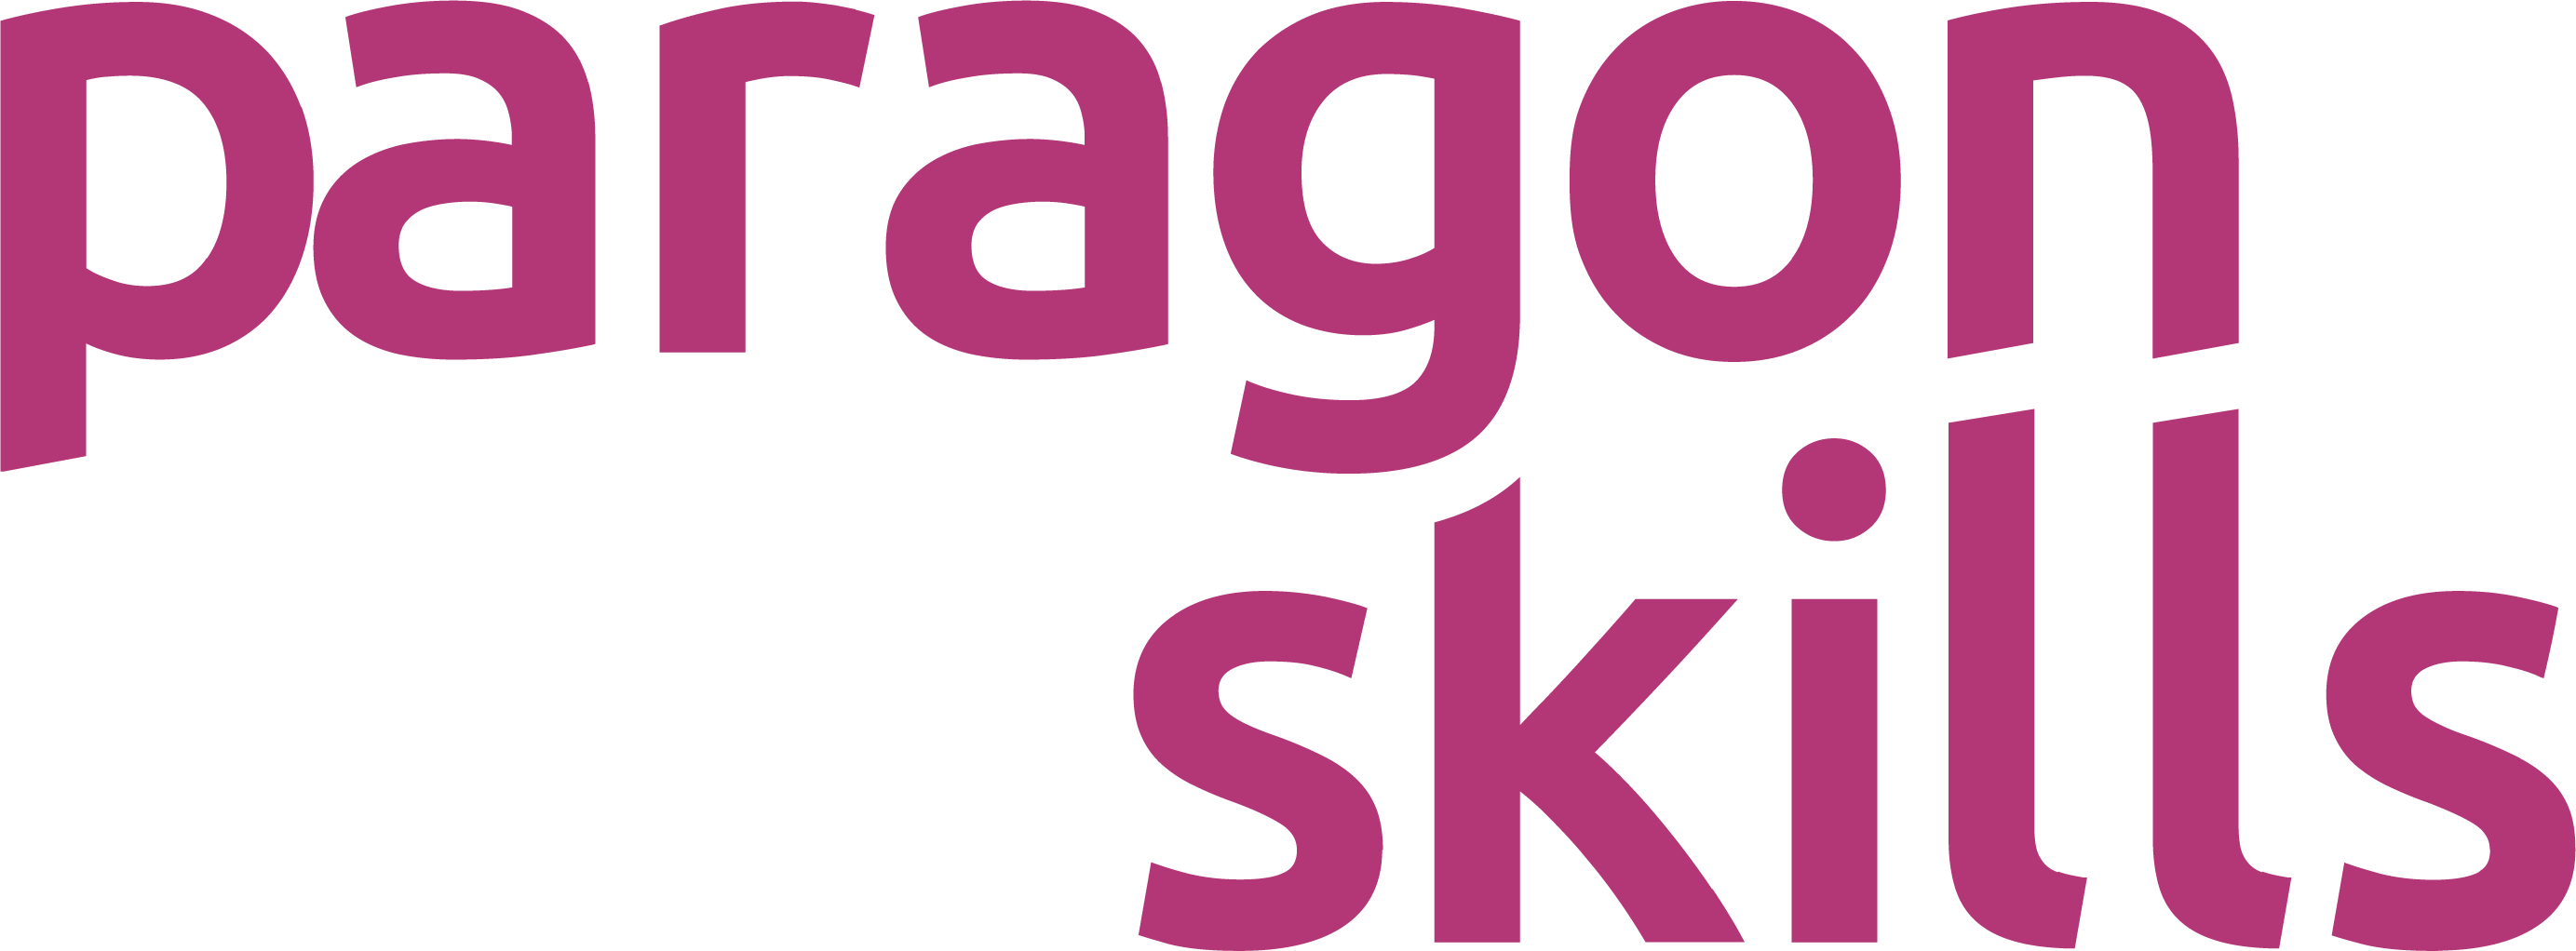 paragon skills logo